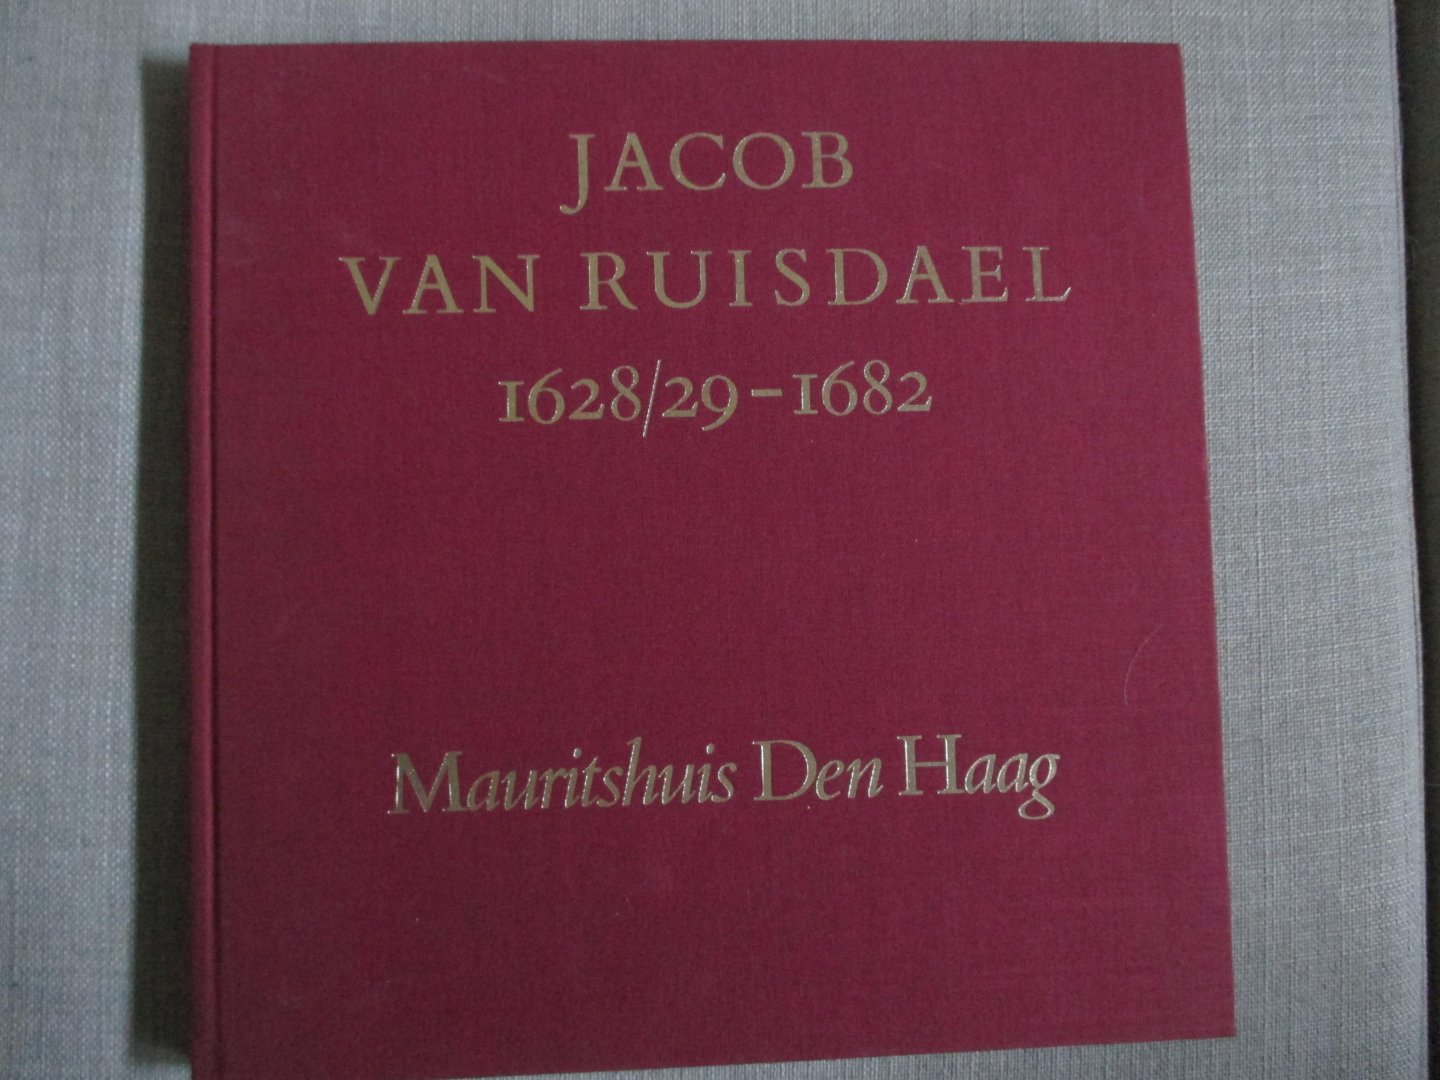  - Jacob van Ruisdael 1628/29-1682